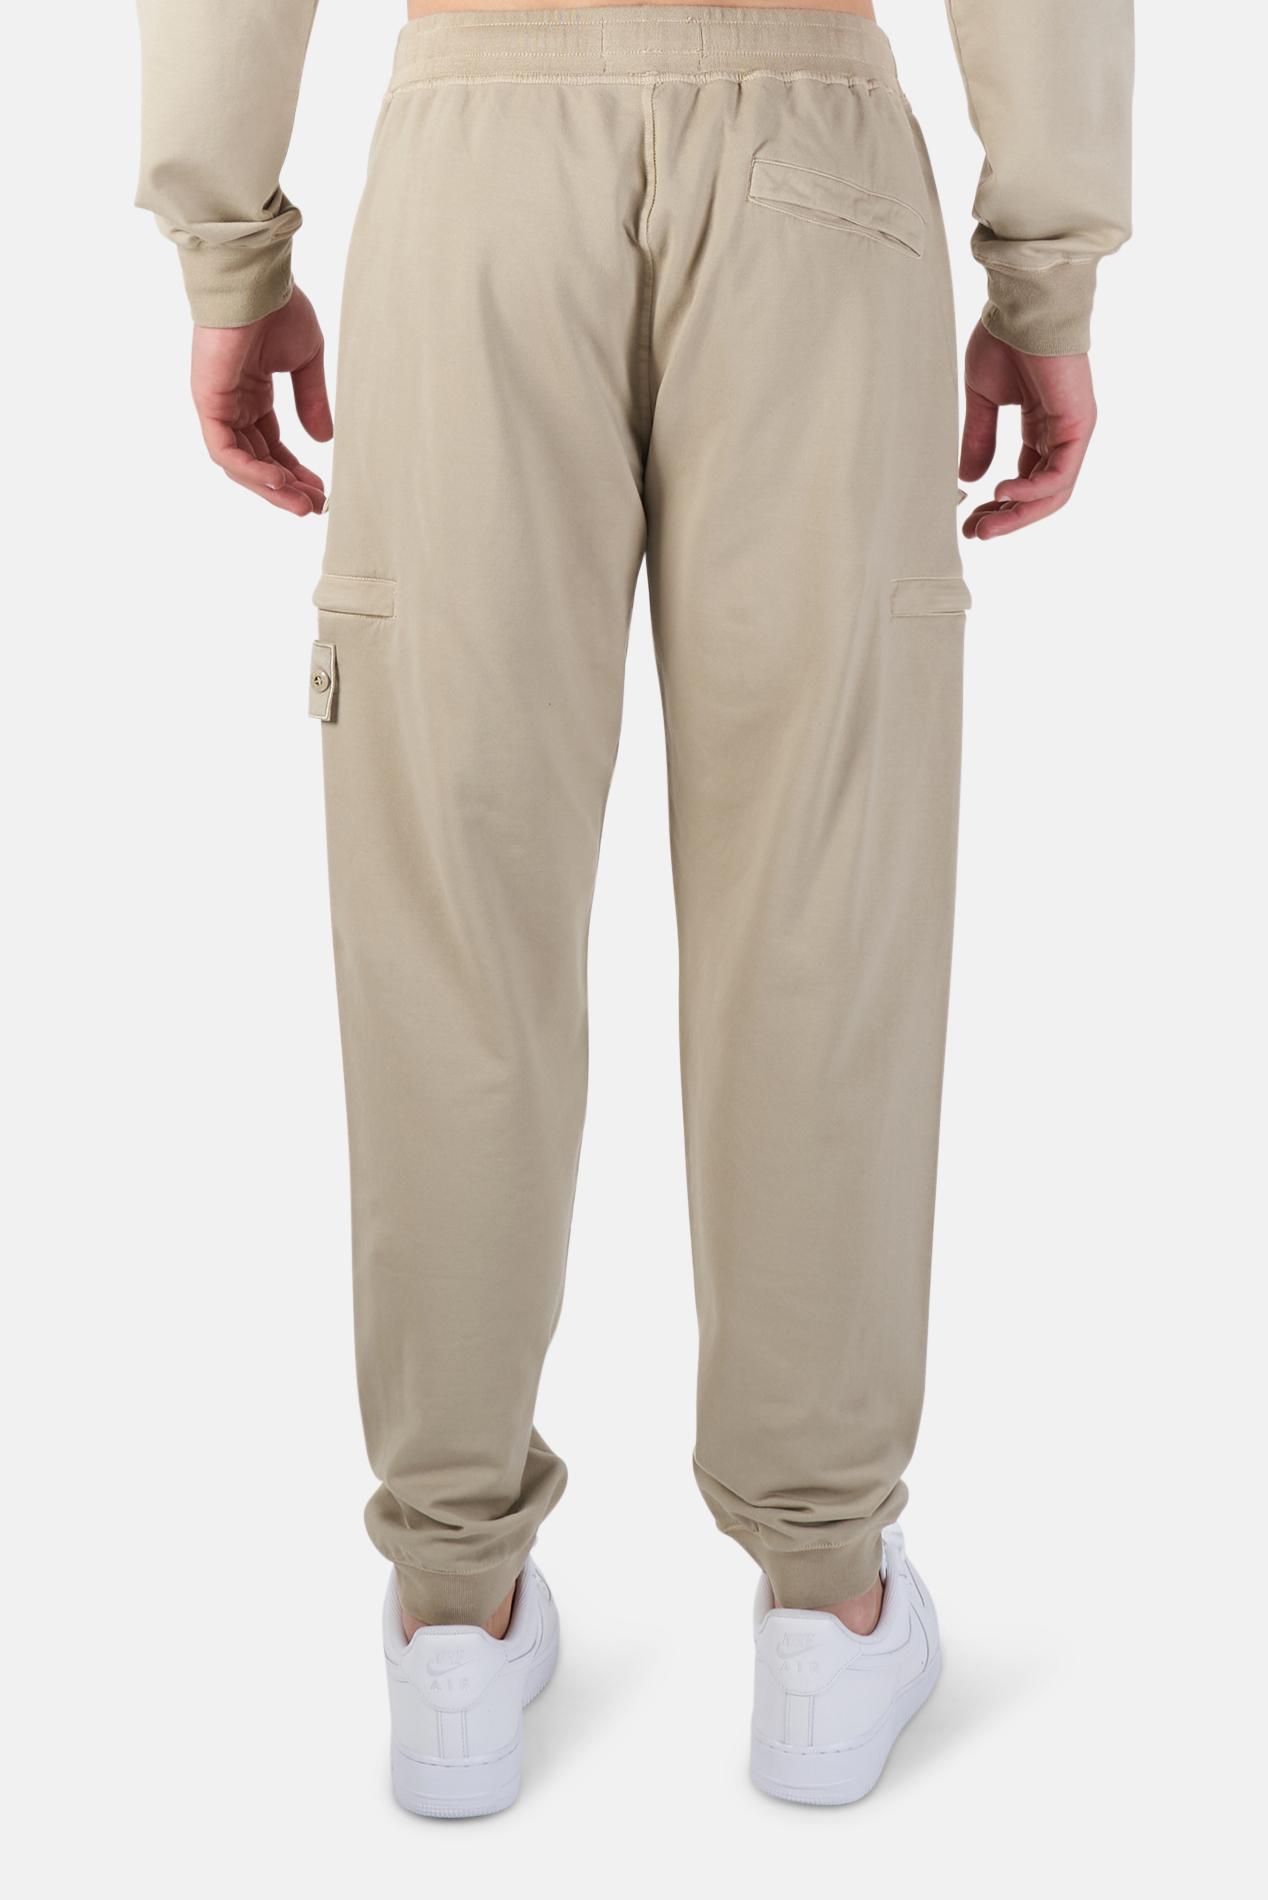 Stone Island Ghost Piece Fleece Cargo Pants in Khaki (Natural) for Men |  Lyst